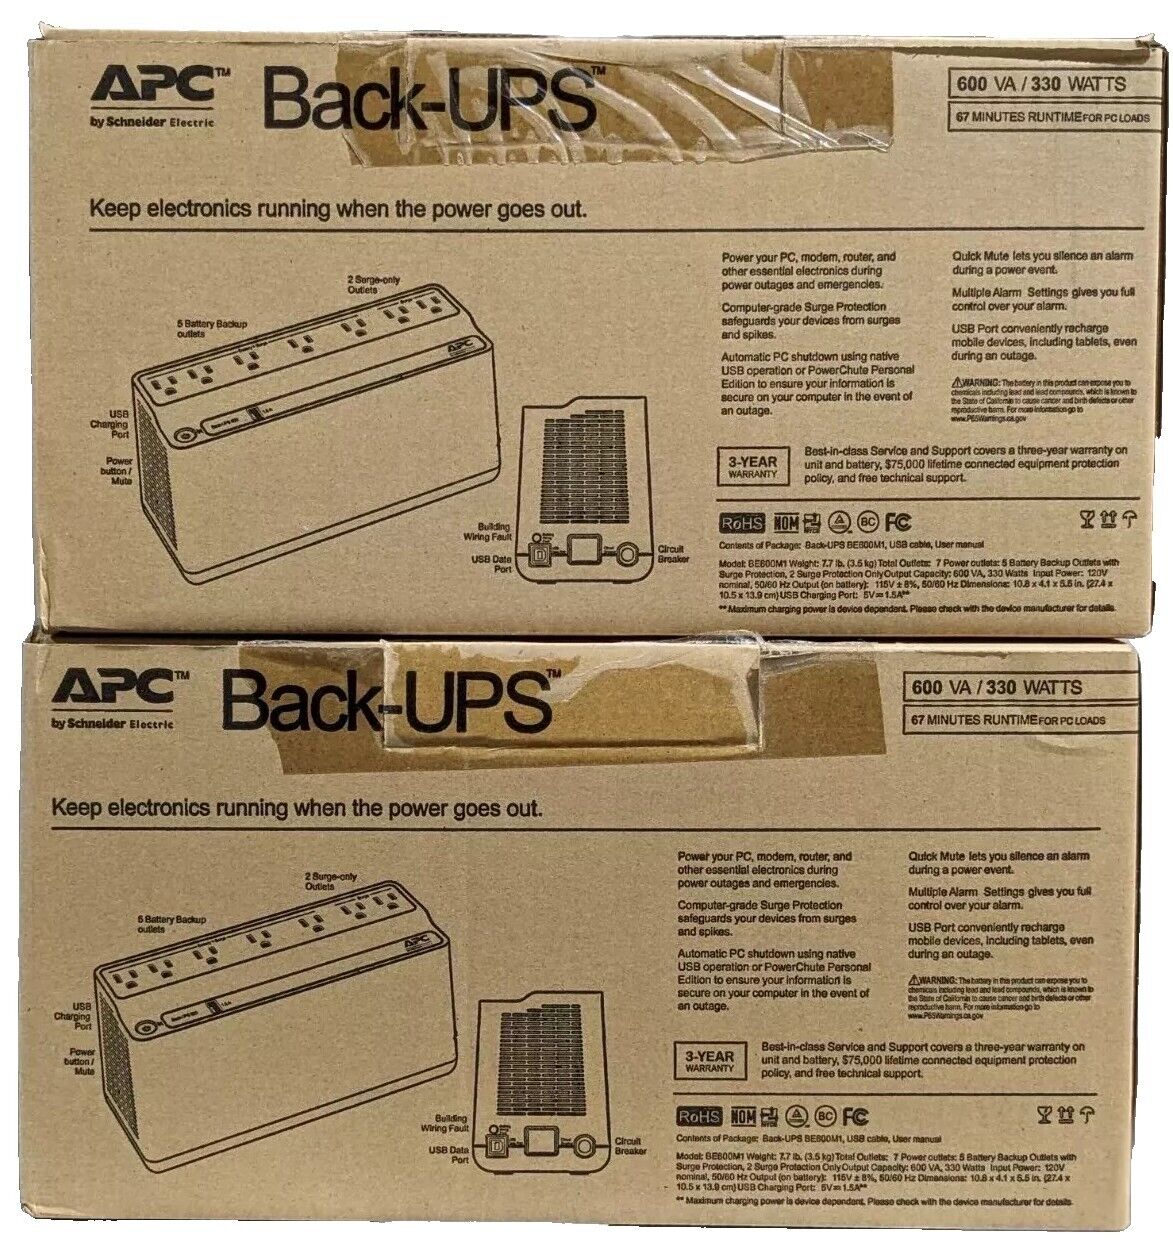 APC by Schneider Electric Back-UPS BRAND NEW Battery Back-up 600VA 120V 2 Total